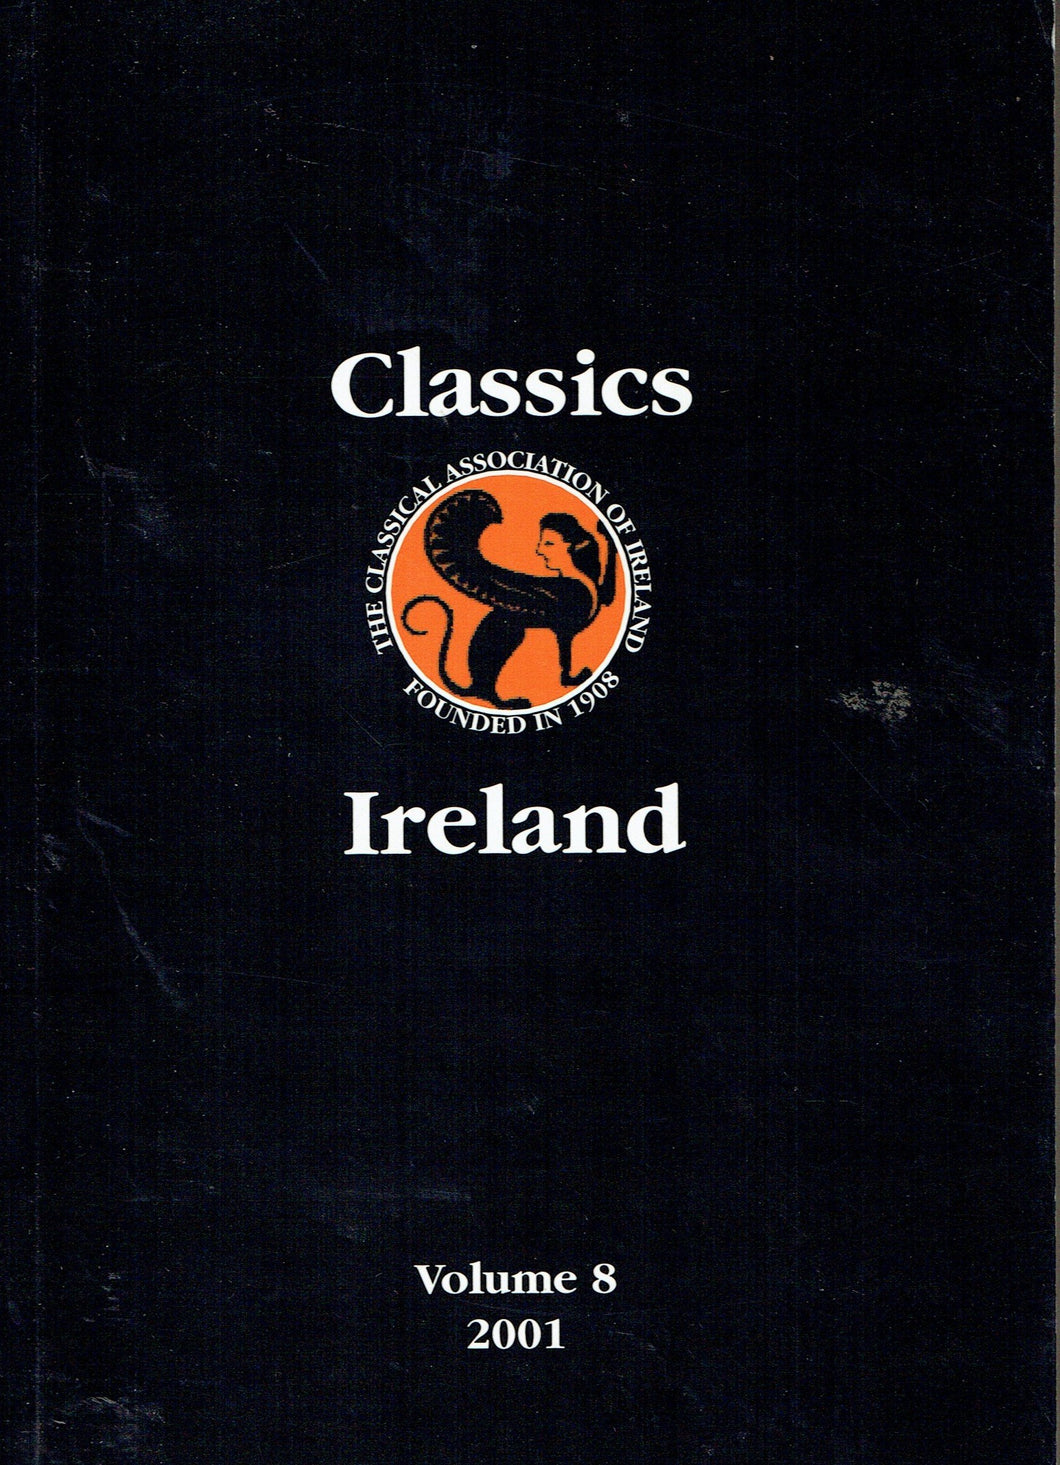 Classics Ireland - Journal of the Classical Association of Ireland, Volume 8, 2001